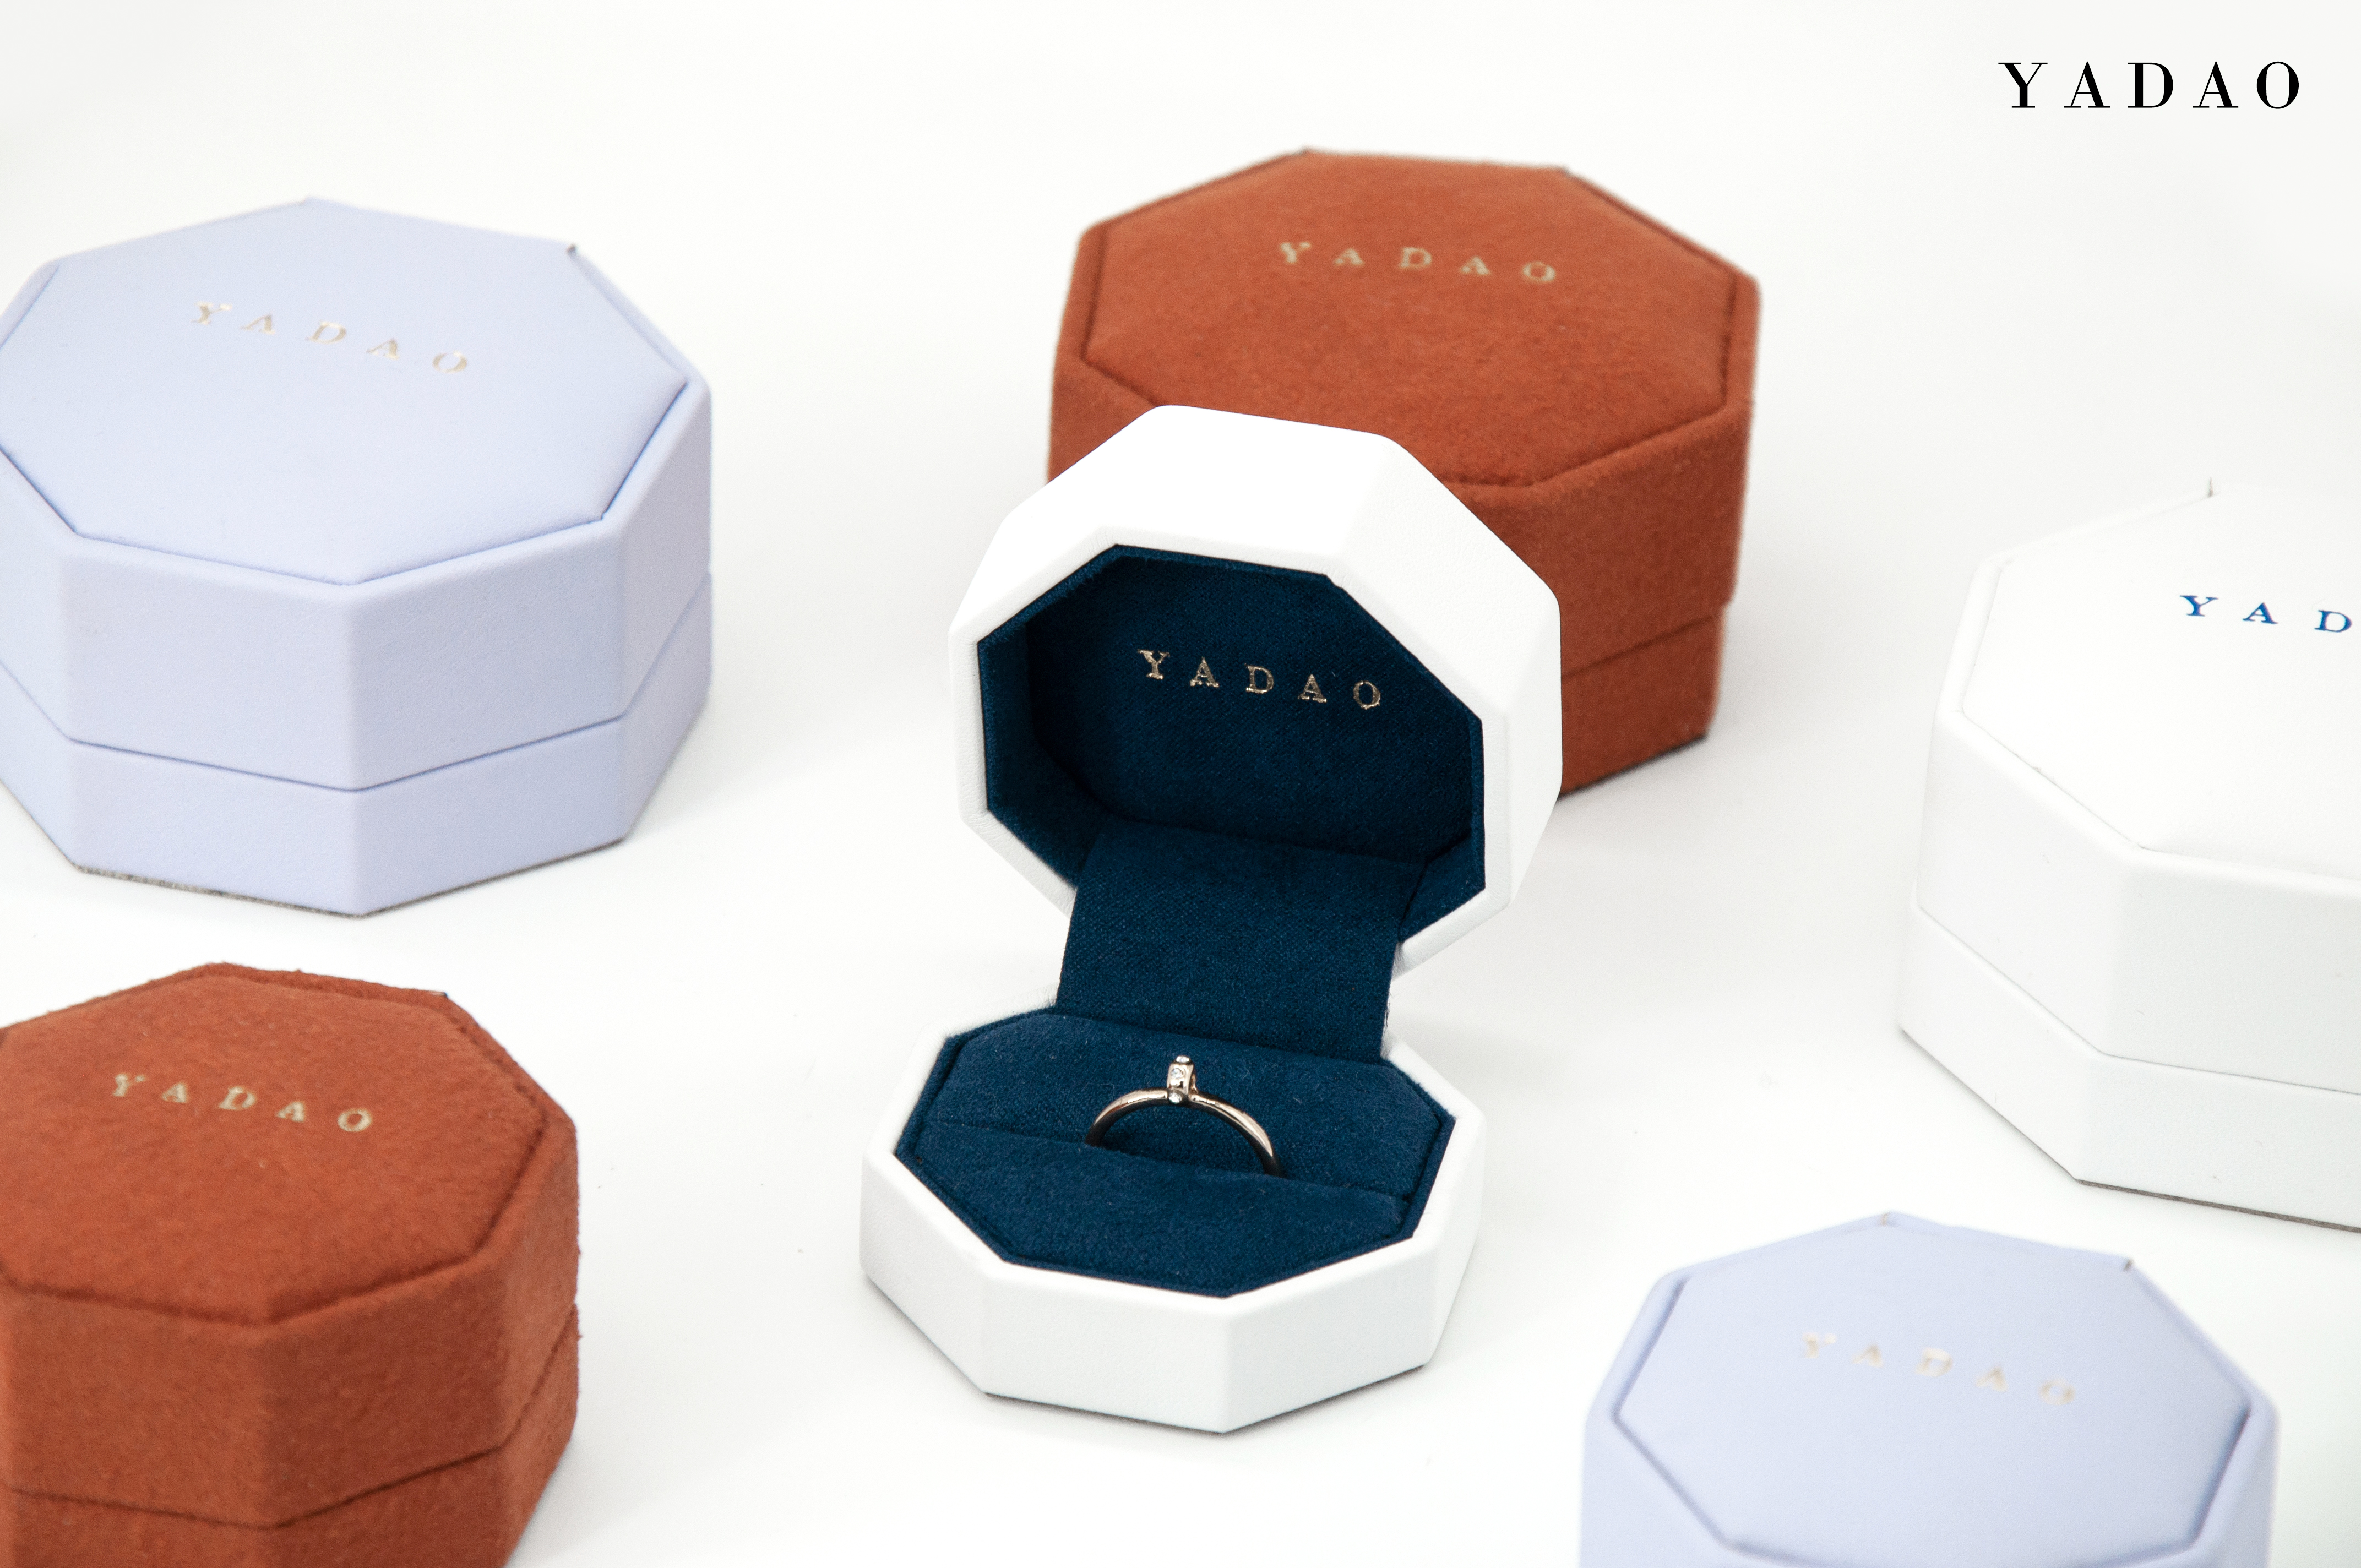 FANAI octagonal jewelry box with rose gold logo nice Jewelry box for diamonds